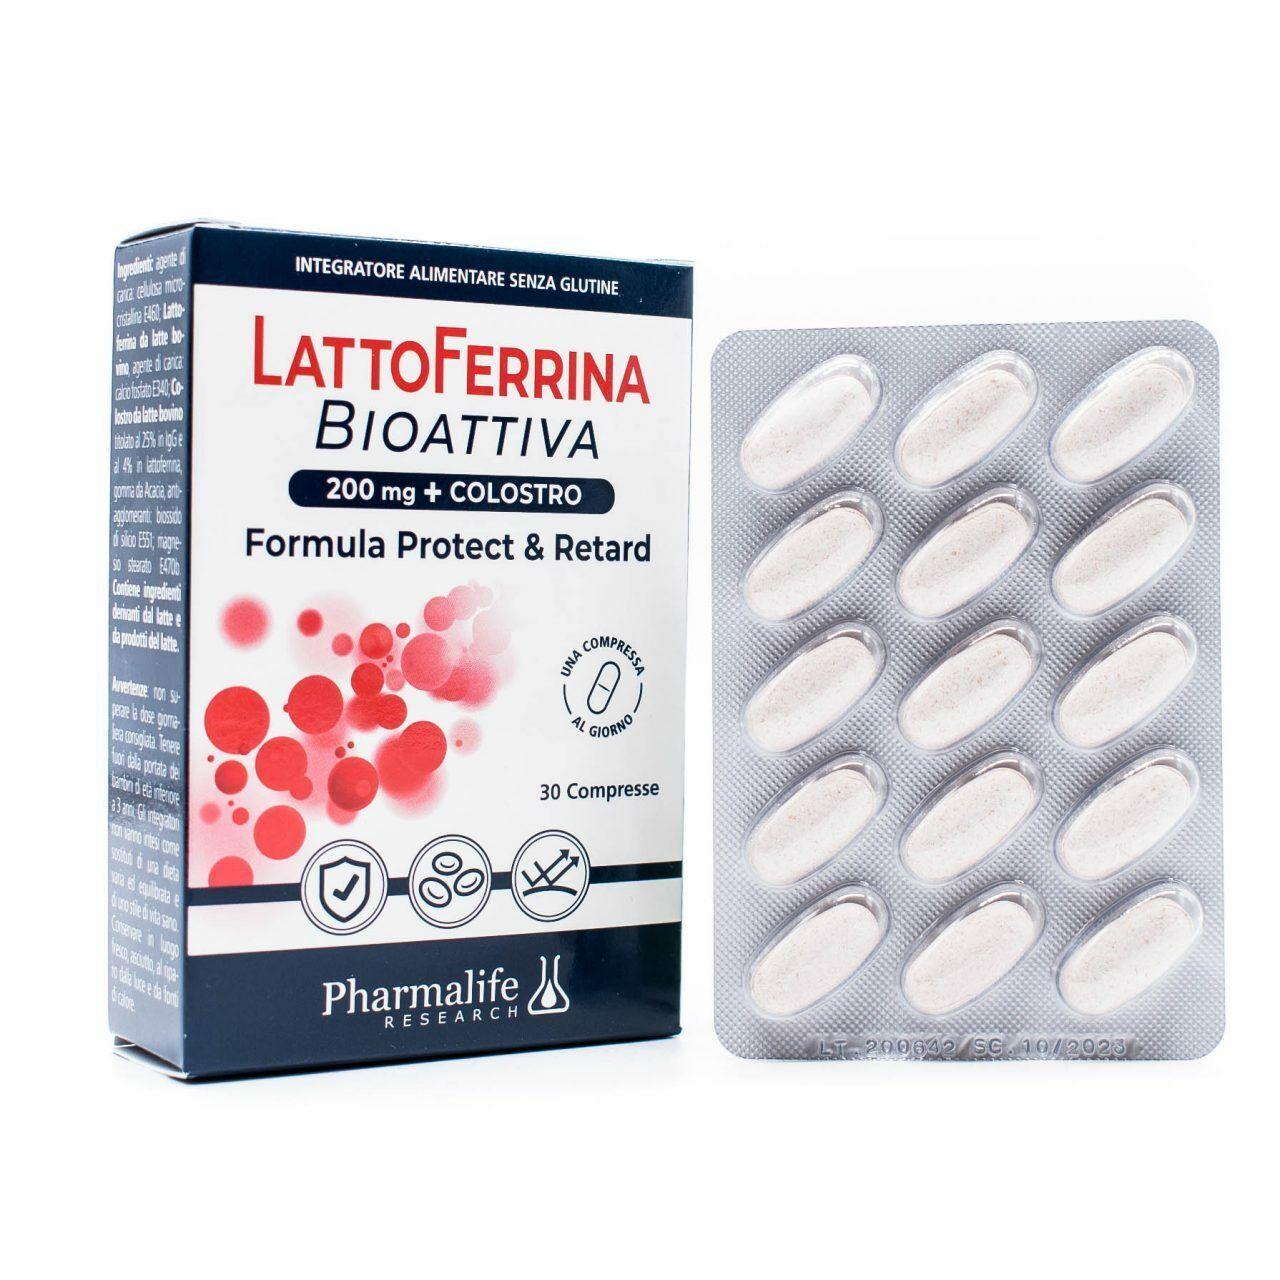 LattoFerrina Bioattiva Pharmalife da 30 Compresse + Sospensione Orale da 200 ml.